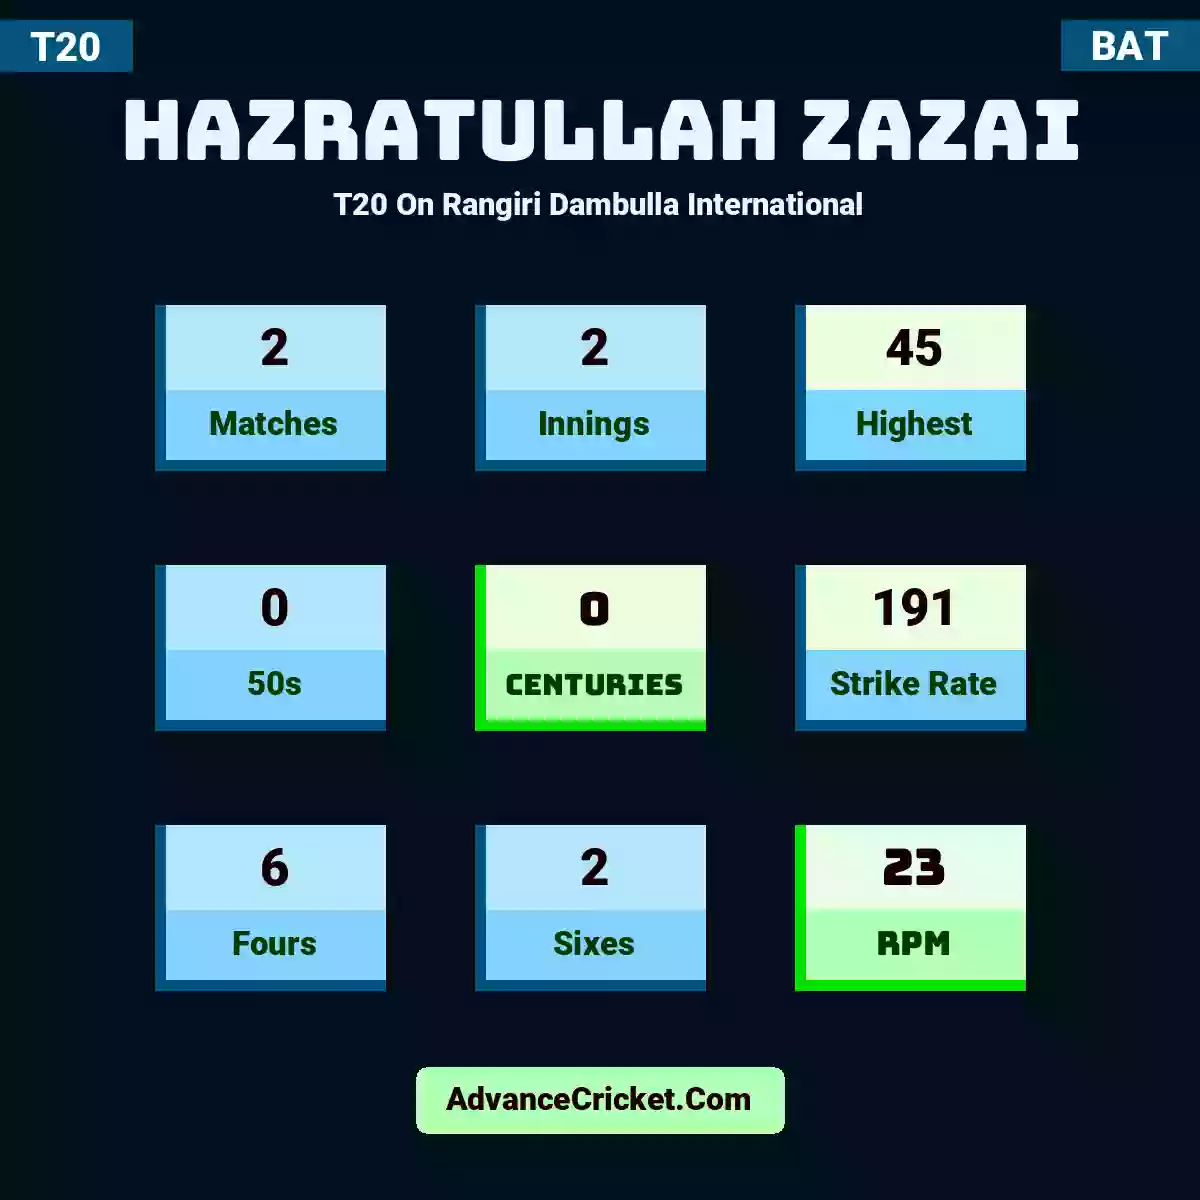 Hazratullah Zazai T20  On Rangiri Dambulla International, Hazratullah Zazai played 2 matches, scored 45 runs as highest, 0 half-centuries, and 0 centuries, with a strike rate of 191. H.Zazai hit 6 fours and 2 sixes, with an RPM of 23.